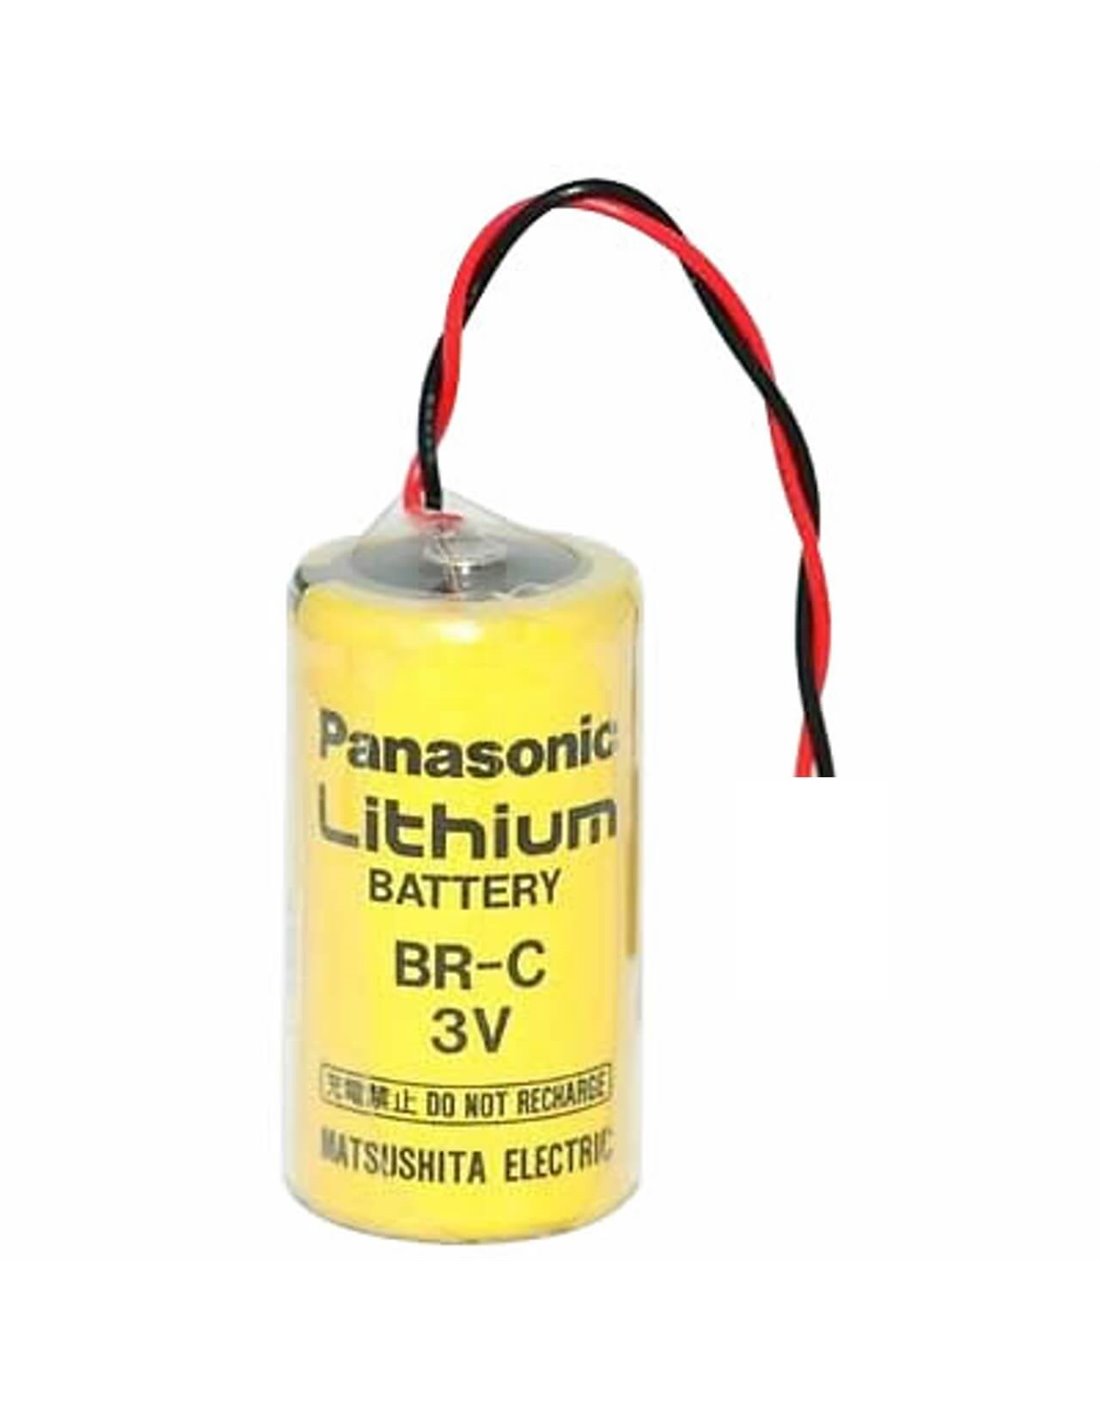 Battery Model Panasonic Br-c, Brc 3V, 5000 mAh - 15Wh